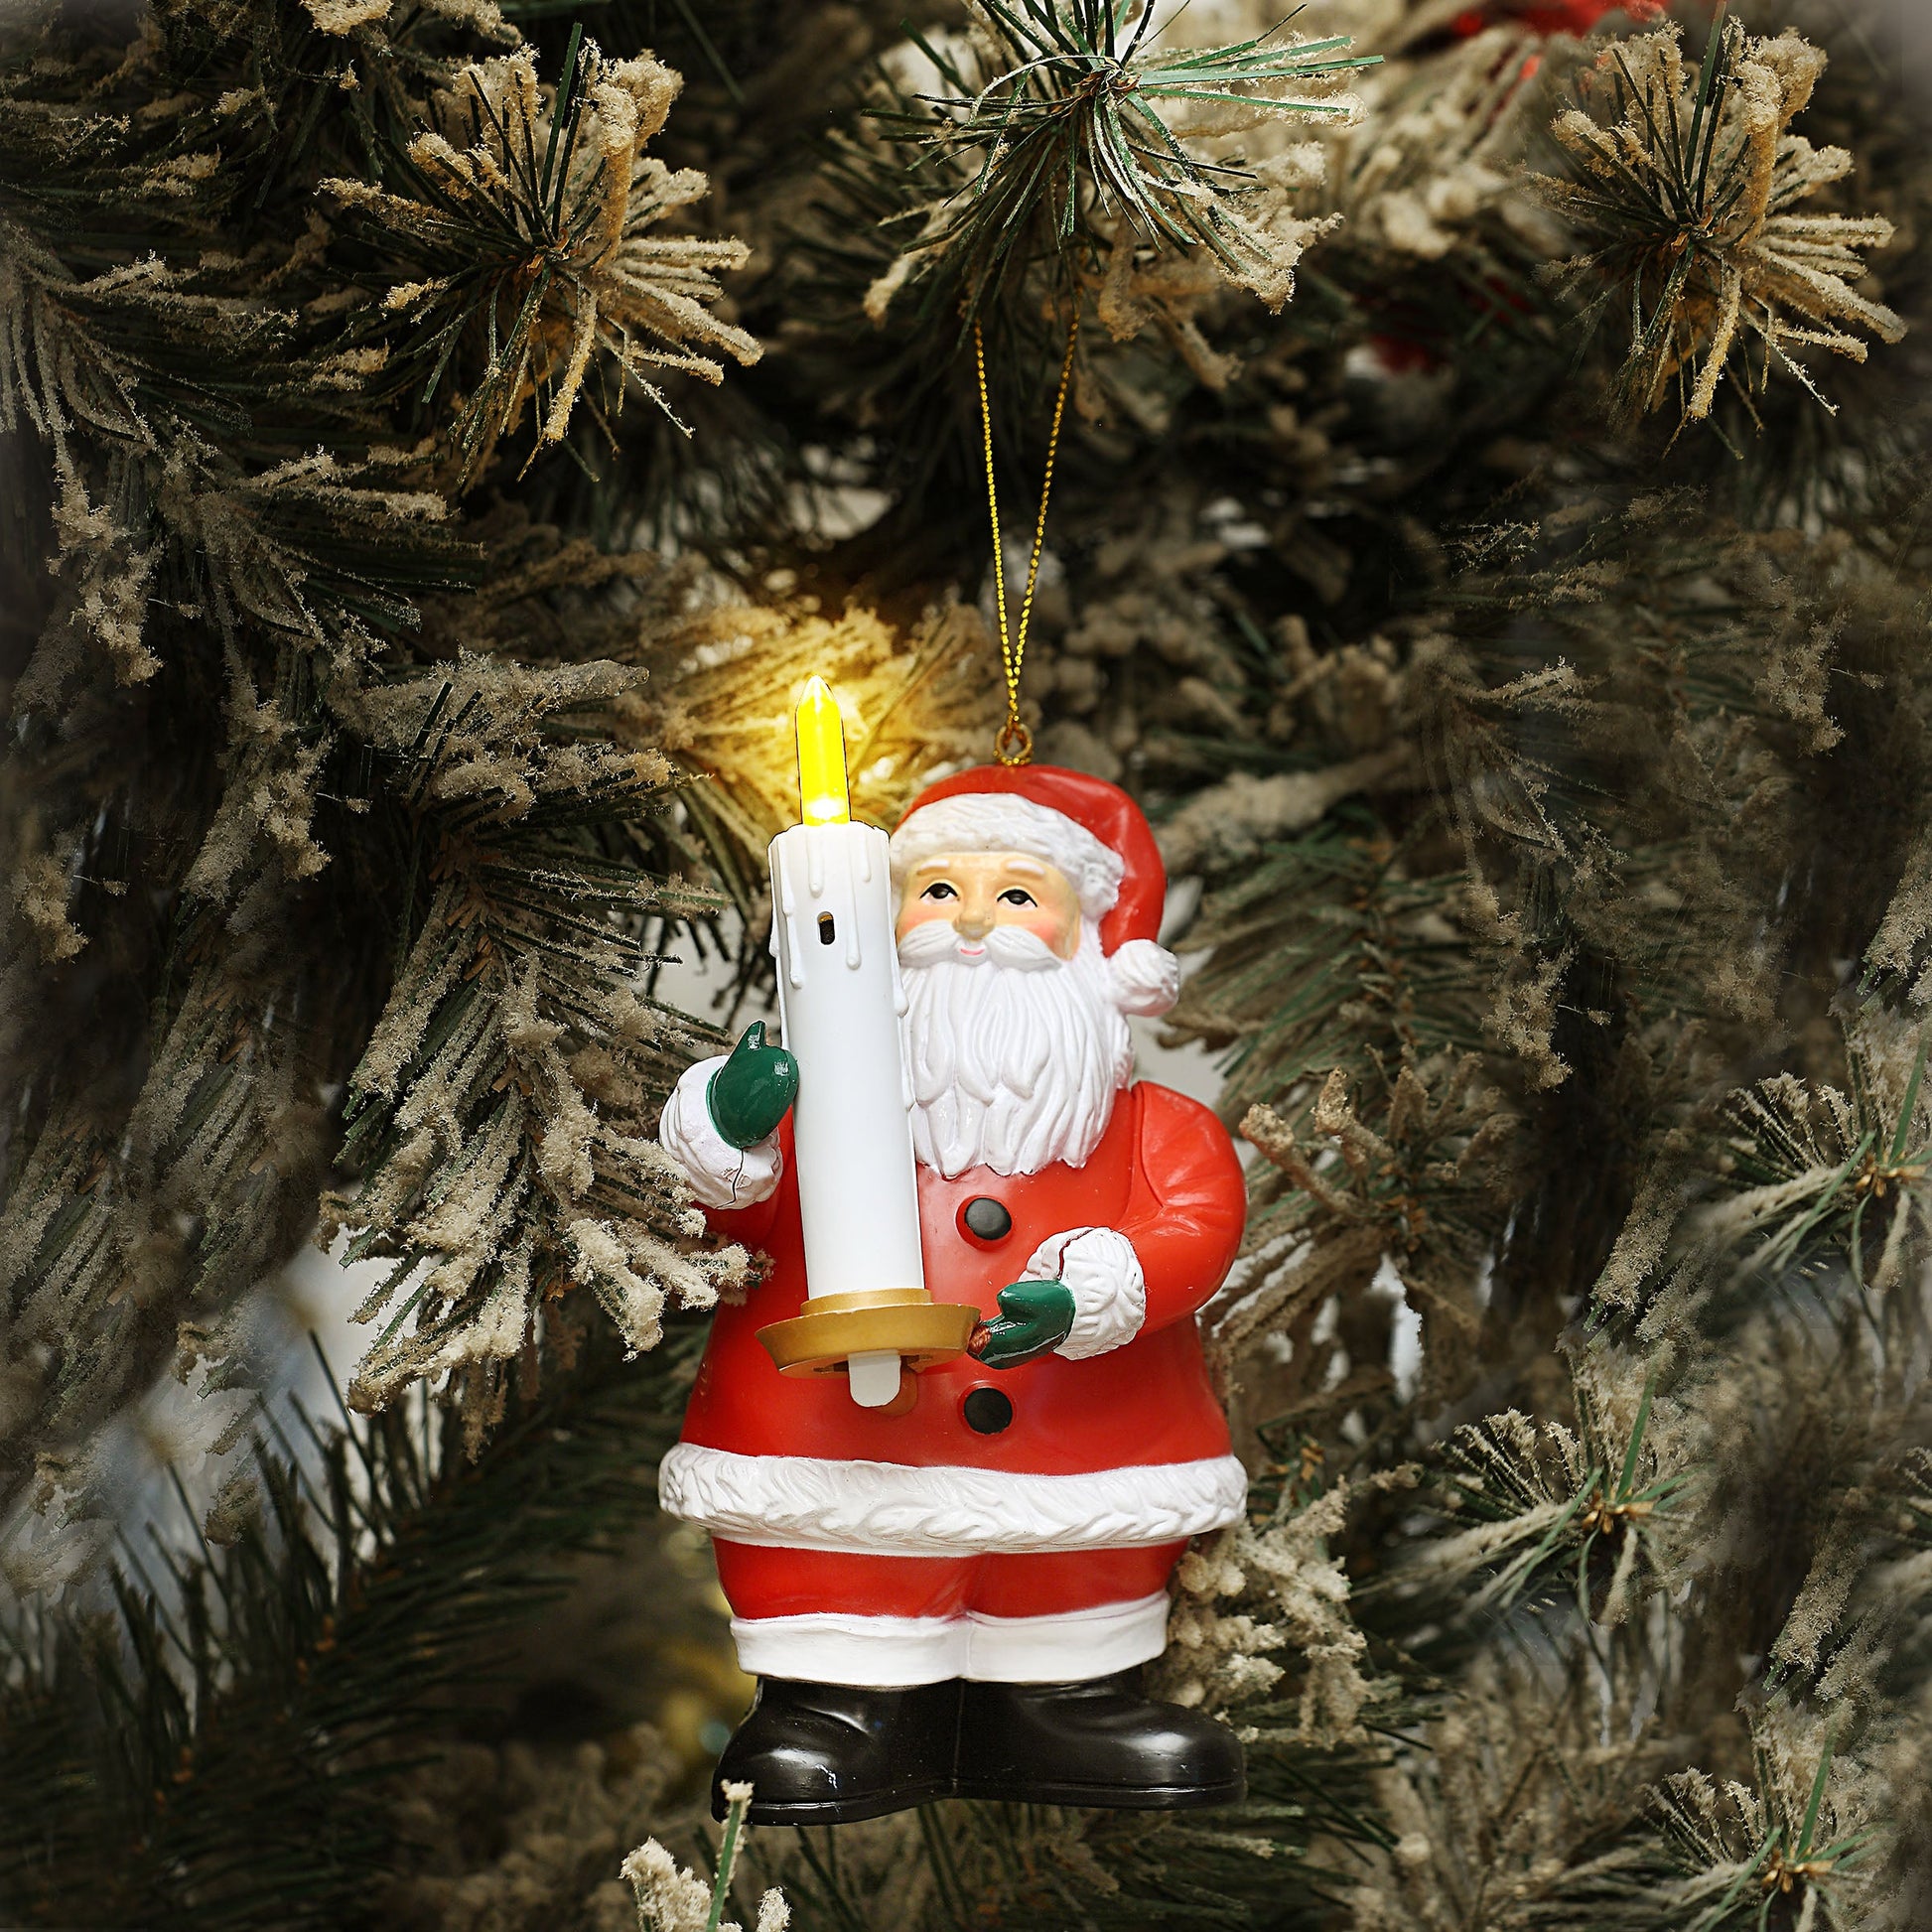 Mr. Christmas Christmas Tree Lighting Ceremony Remote Control Box